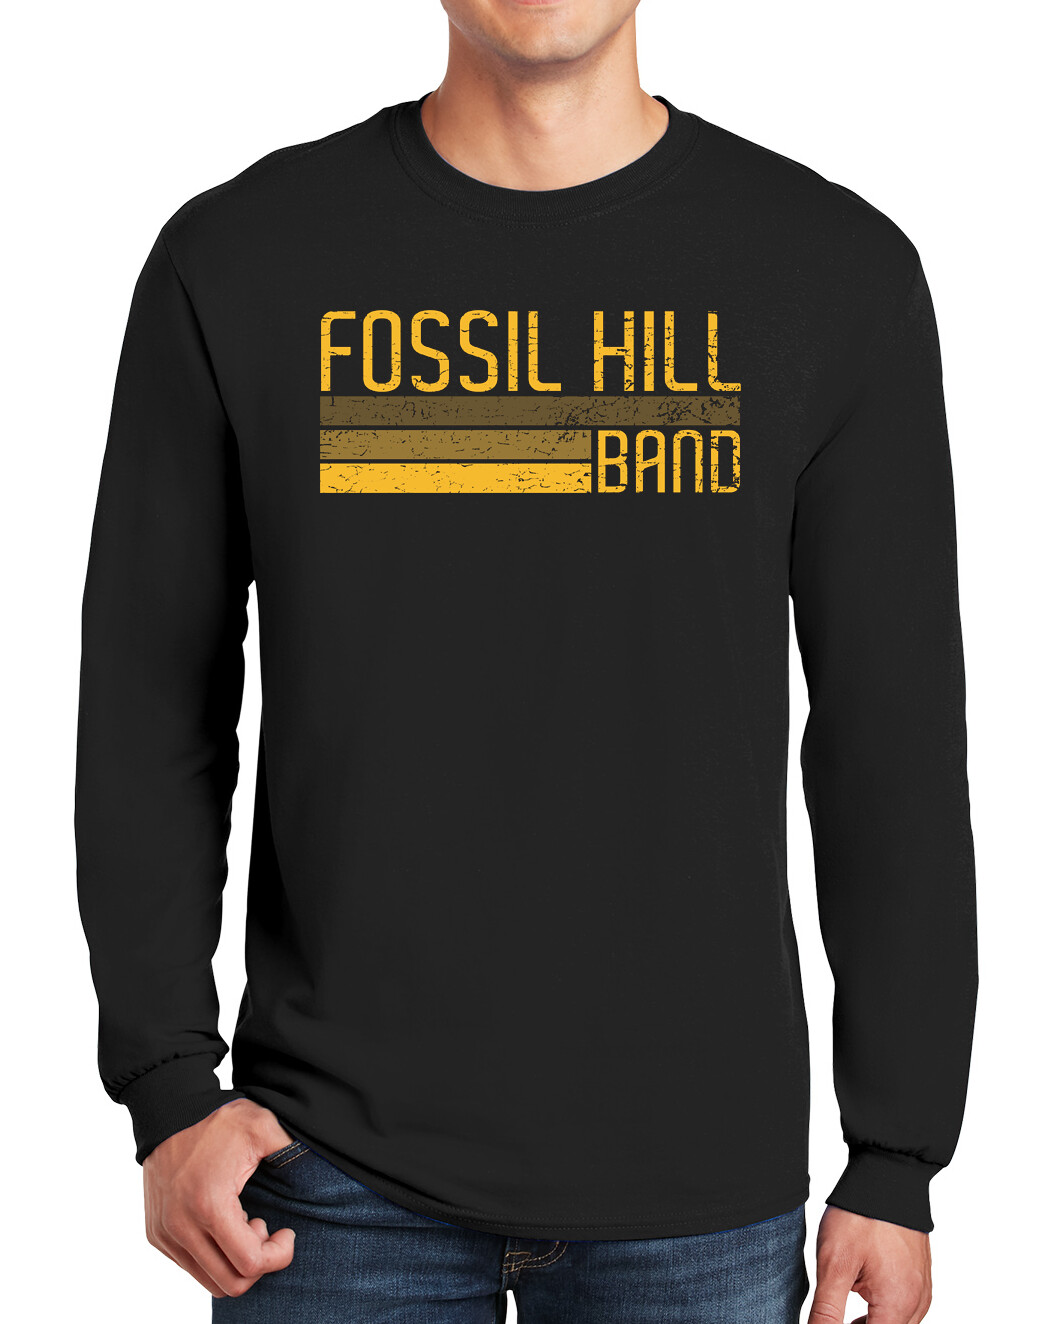 2023 Fossil Hill Band Long Sleeve Shirt